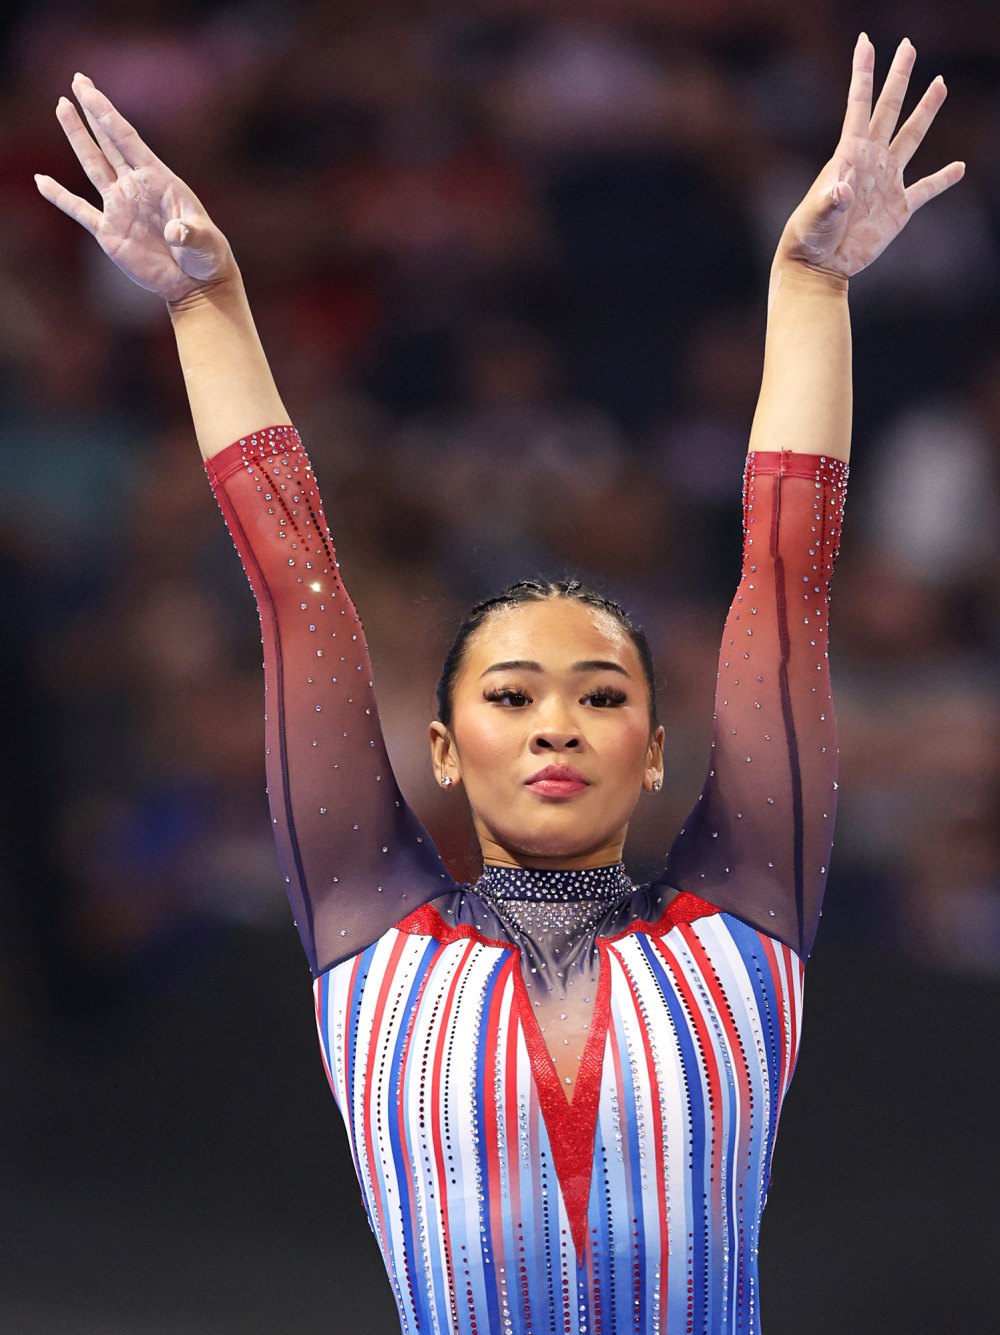 Olympian Suni Lee Almost Quit Gymnastics Due to Kidney Disease